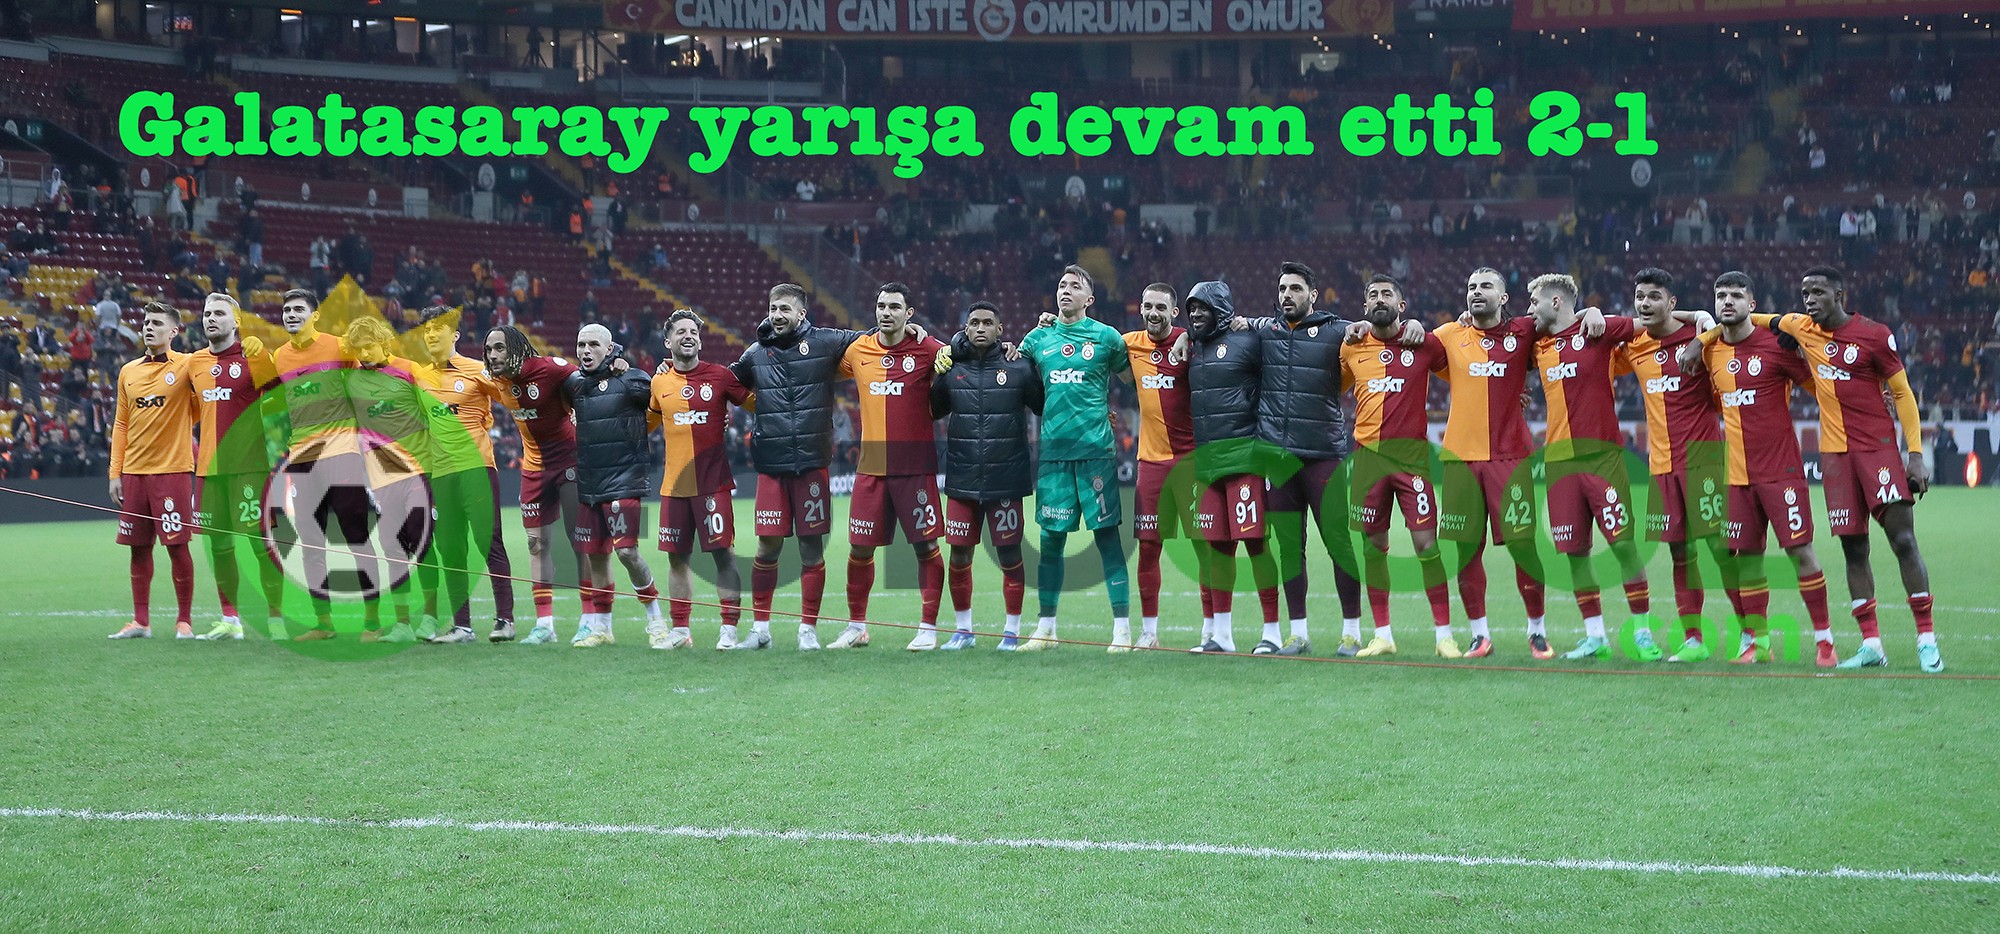 Galatasaray Yarışa devam etti 2-1